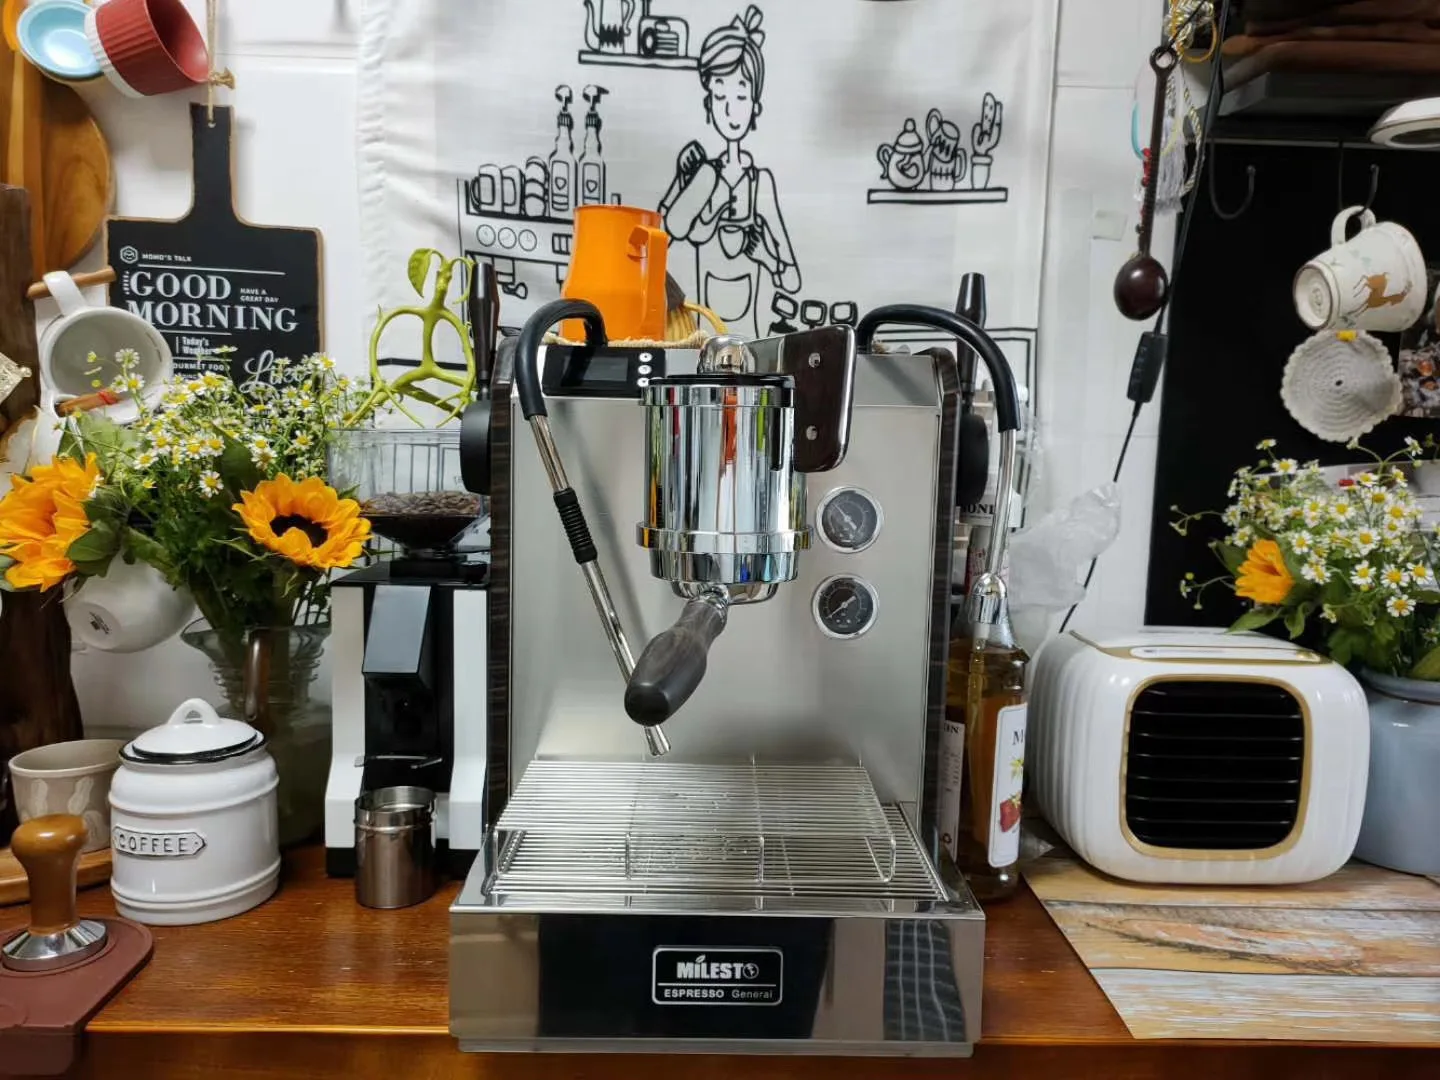 2019 automatic modern espresso electric coffee